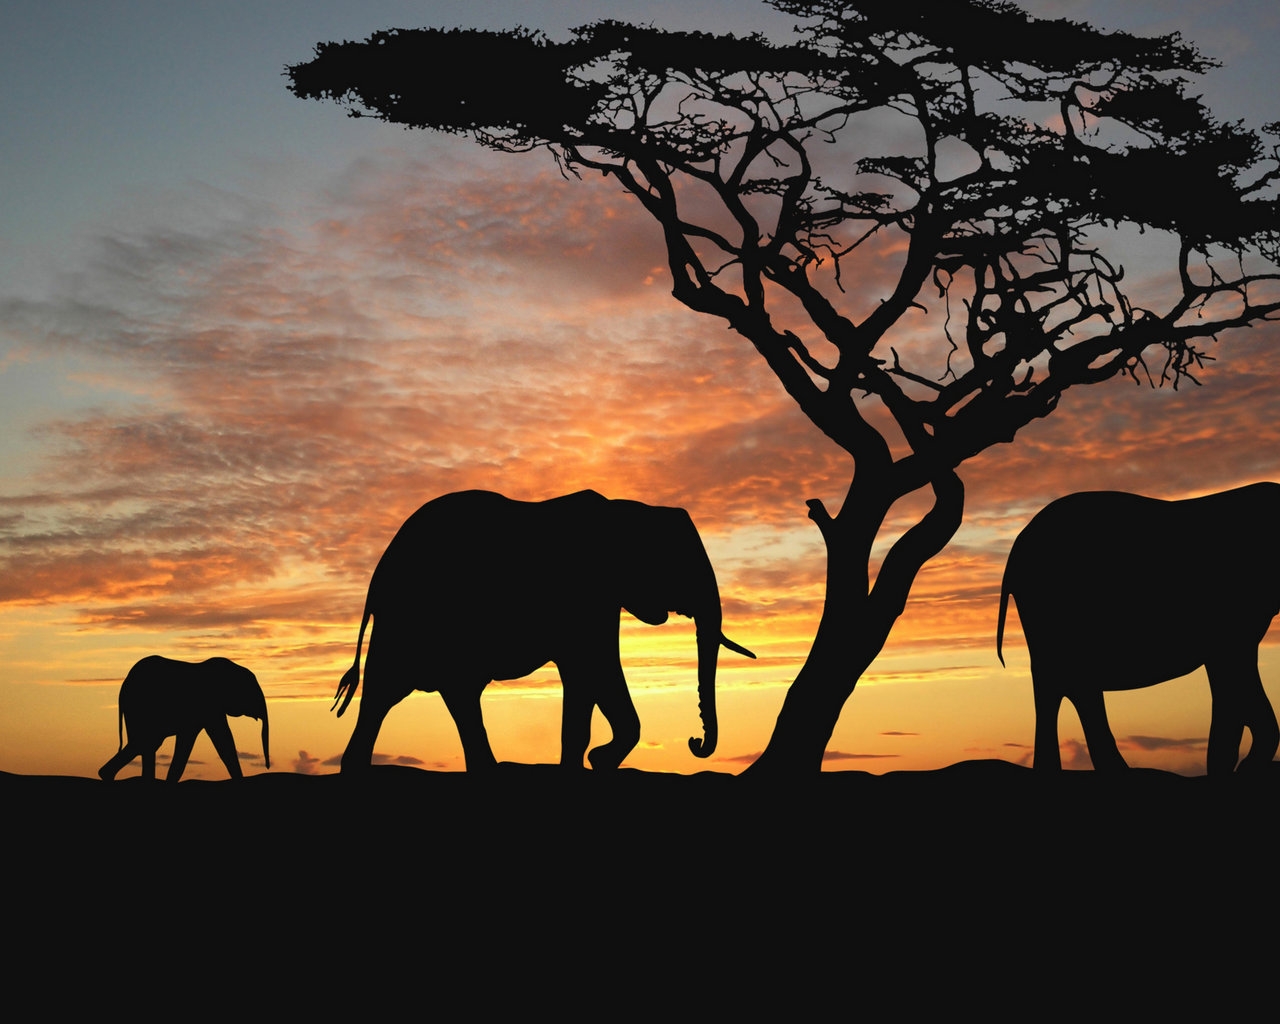 Elephants walking to westward for 1280 x 1024 resolution